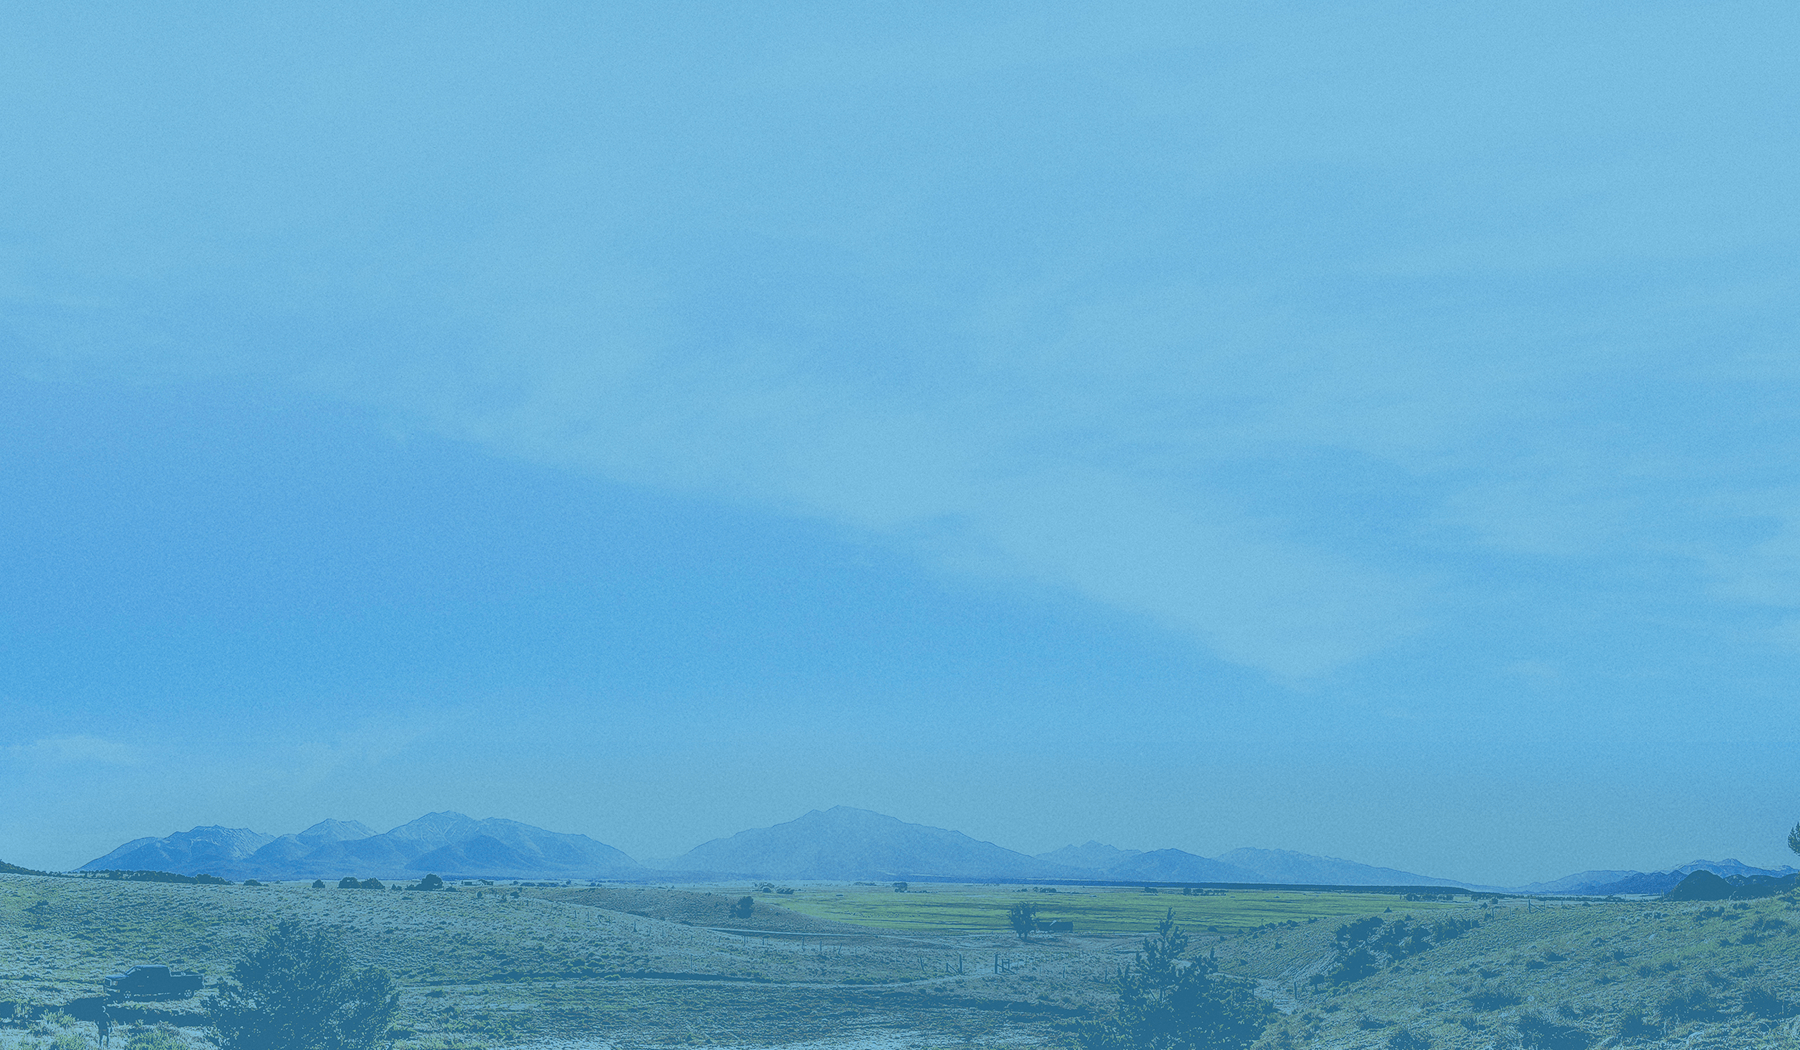 Seven Peaks Colorado landscape background